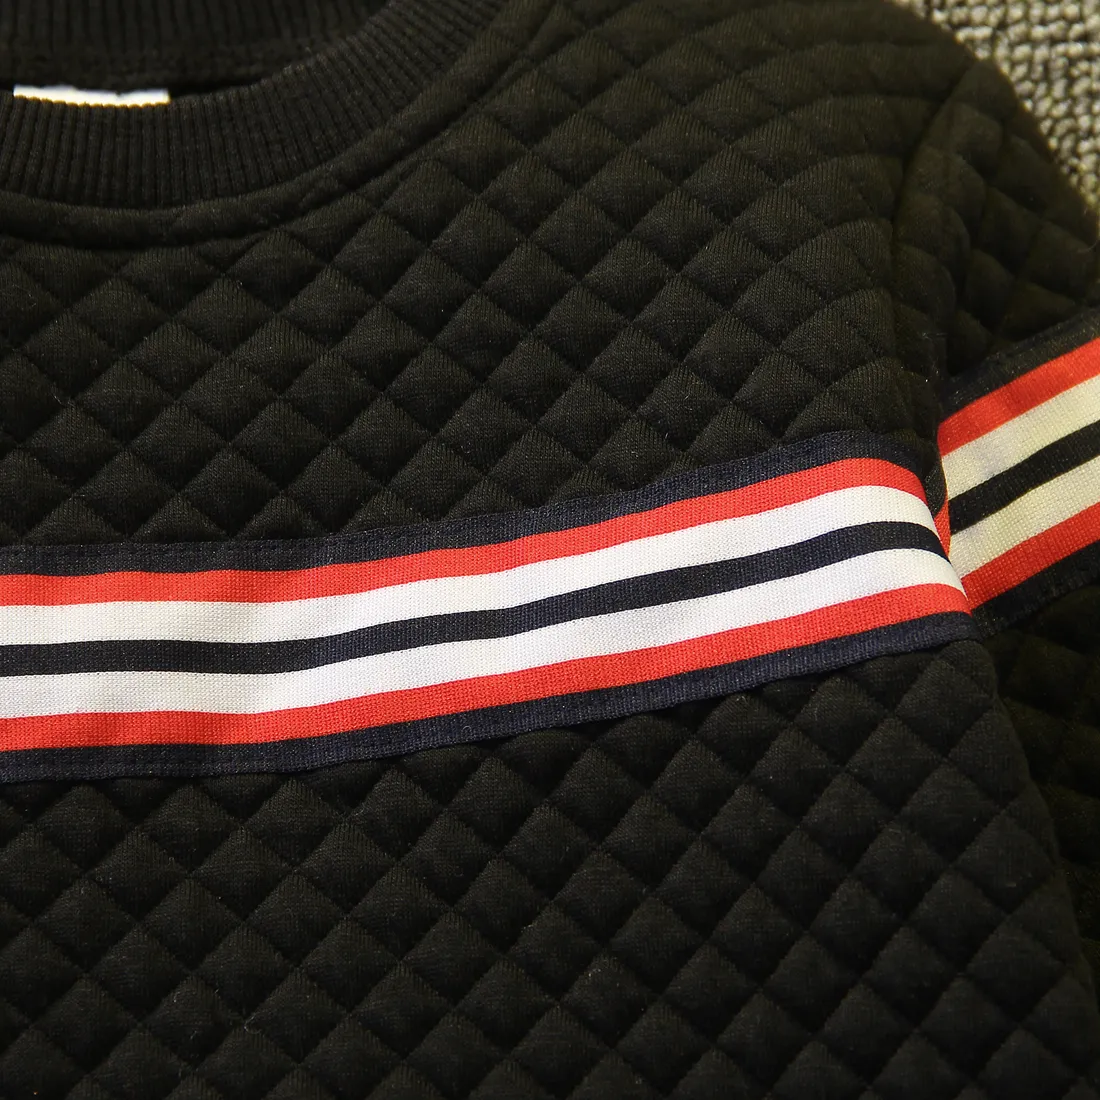 Kinder Unisex Borte Unifarben Pullover Sweatshirts schwarz big image 1